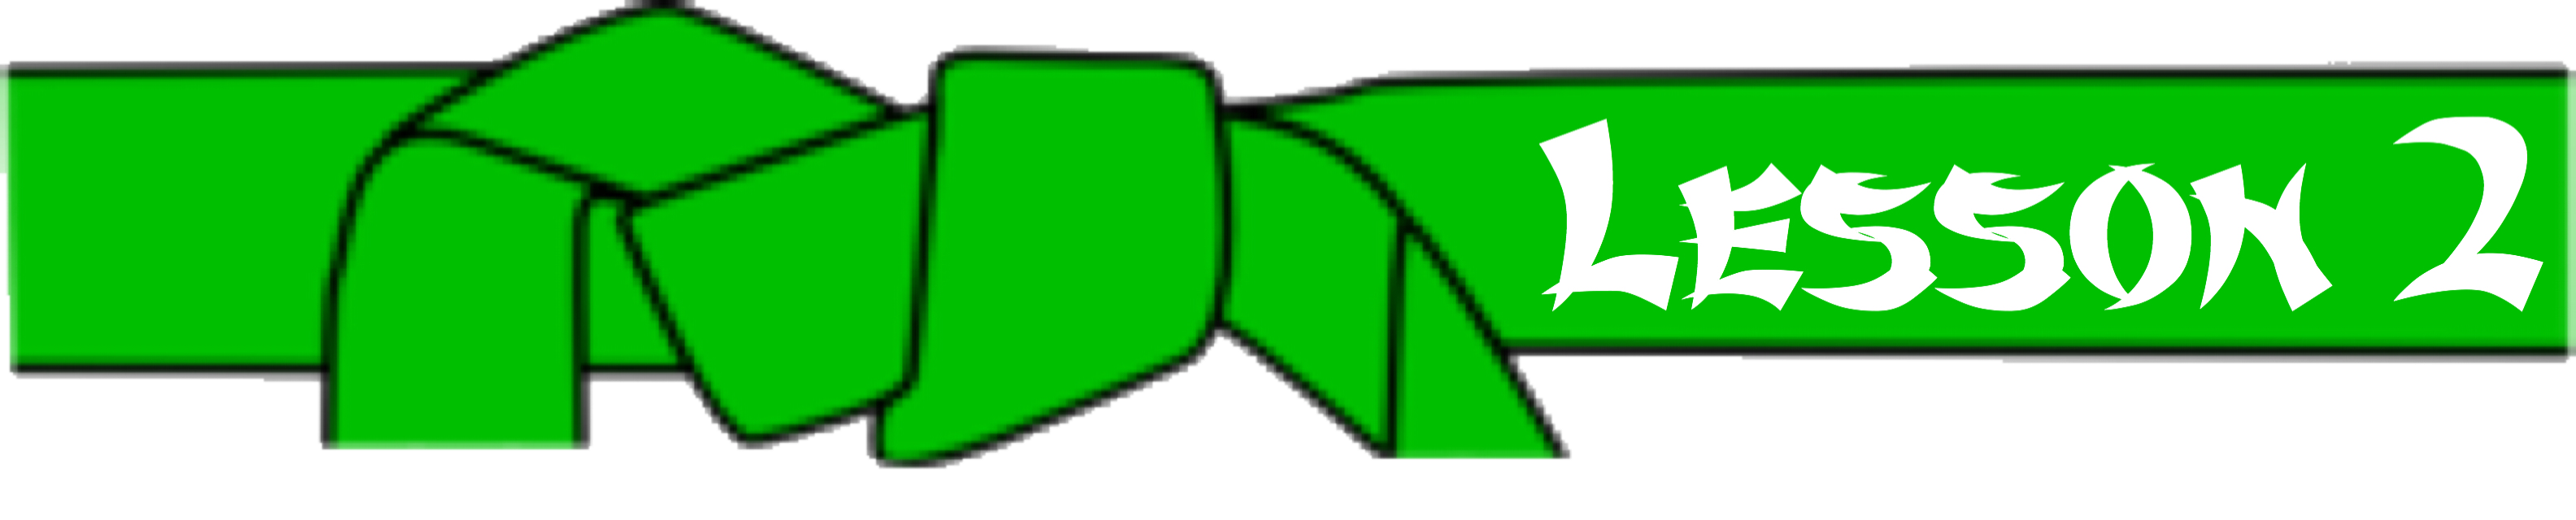 Green Belt Image